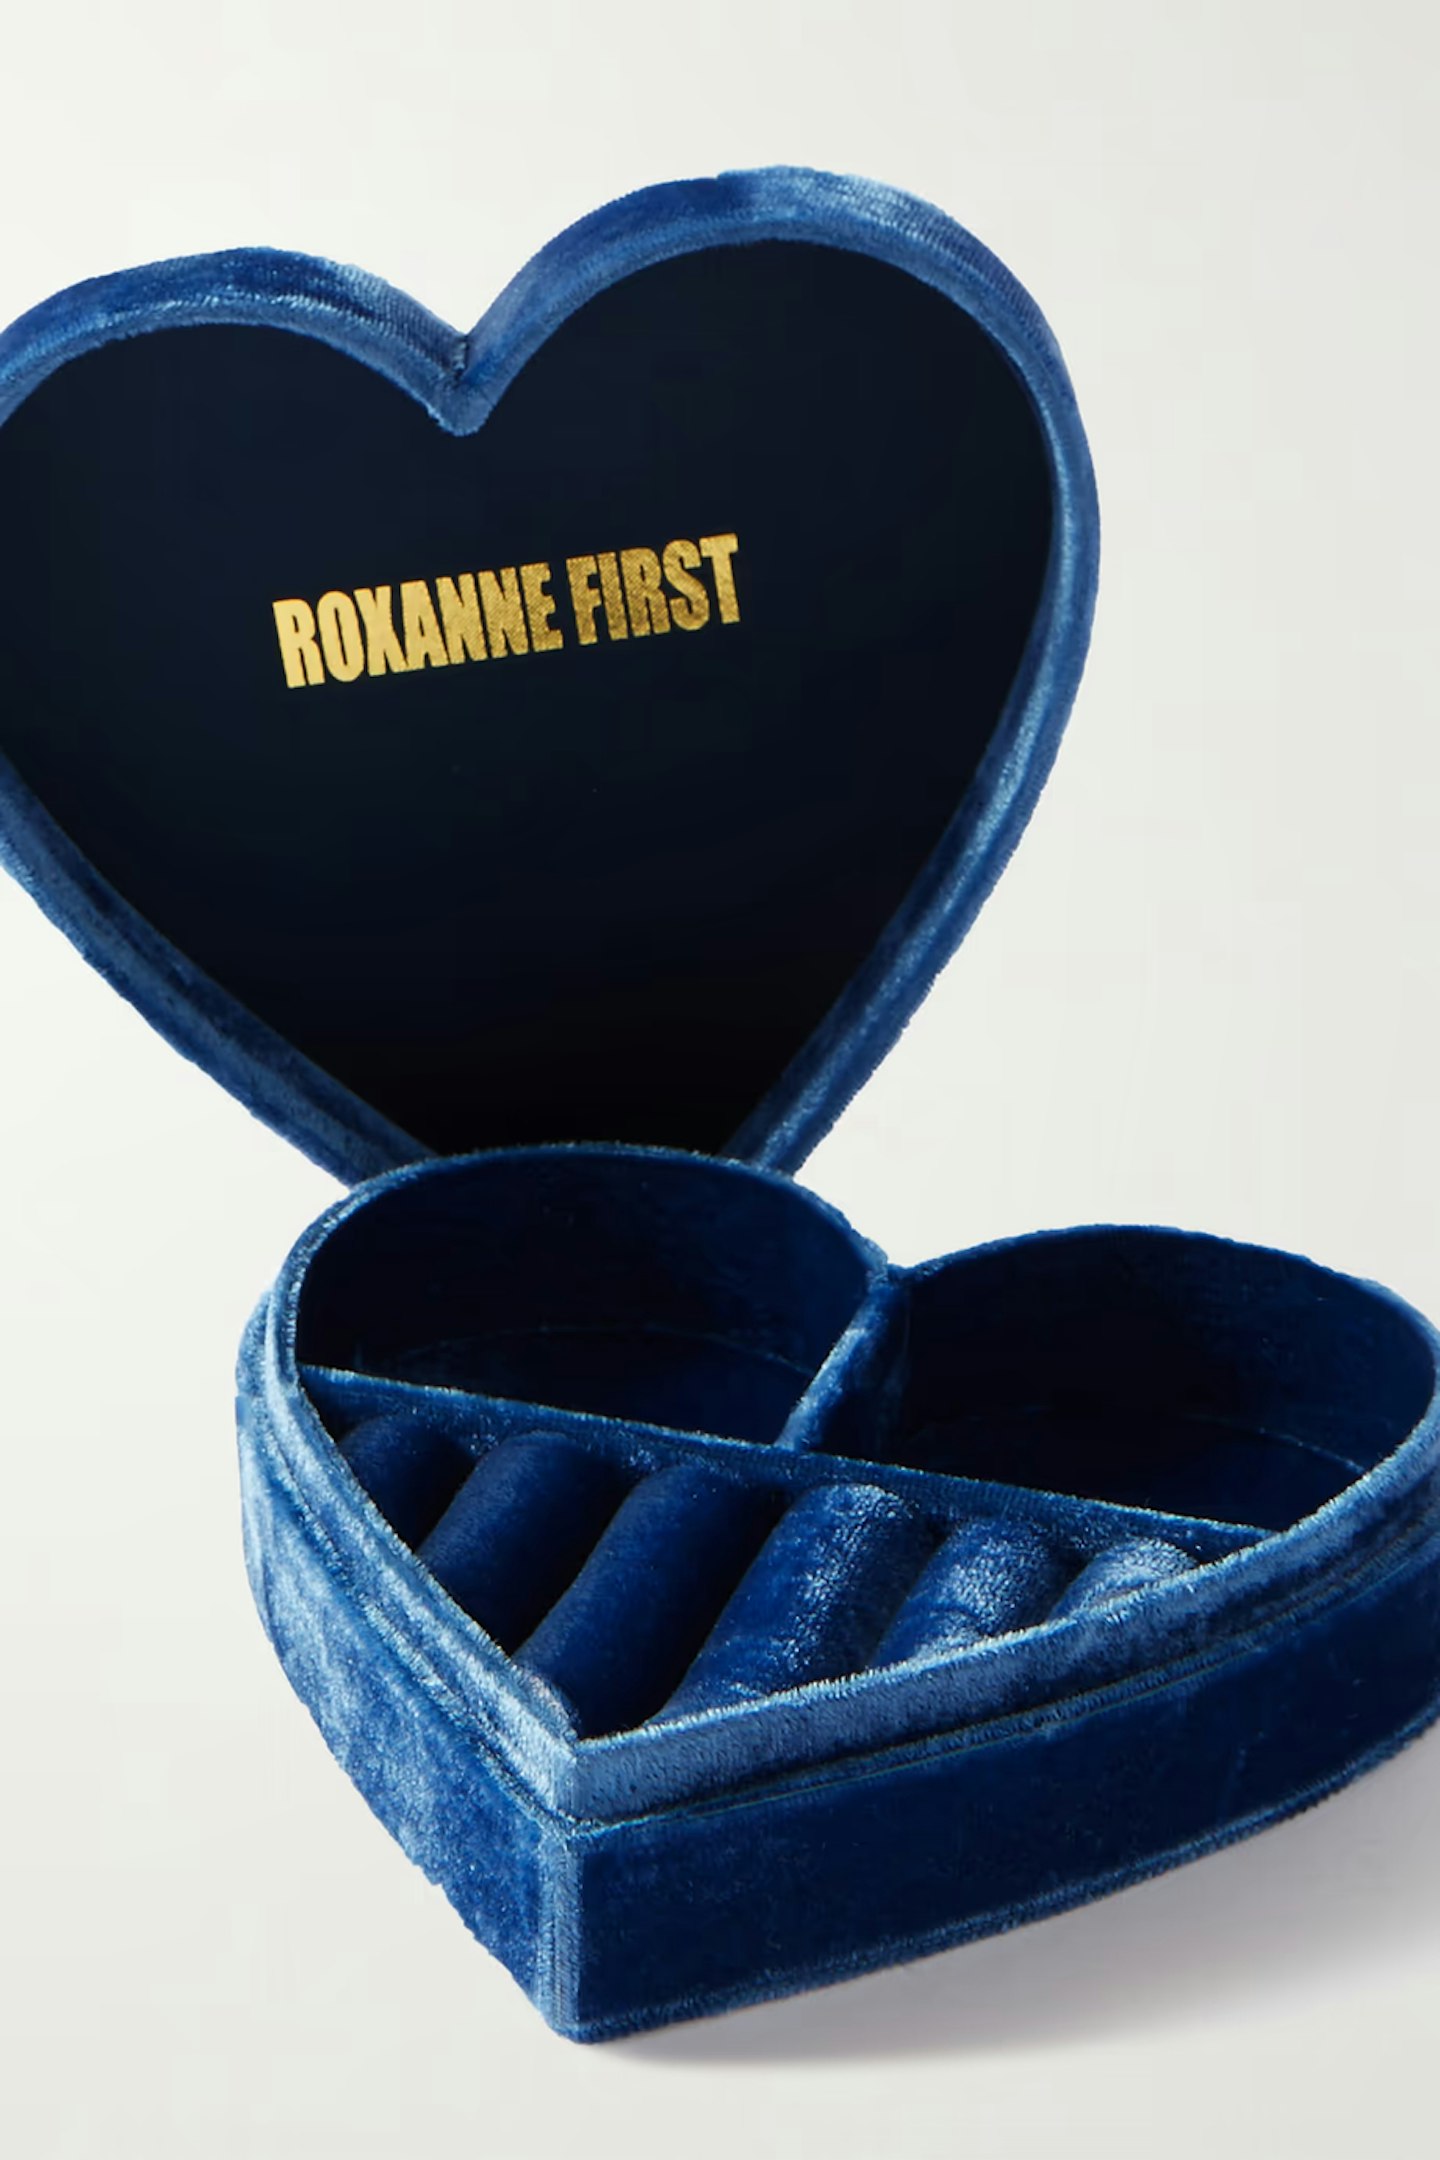 roxanne first jewellery box 